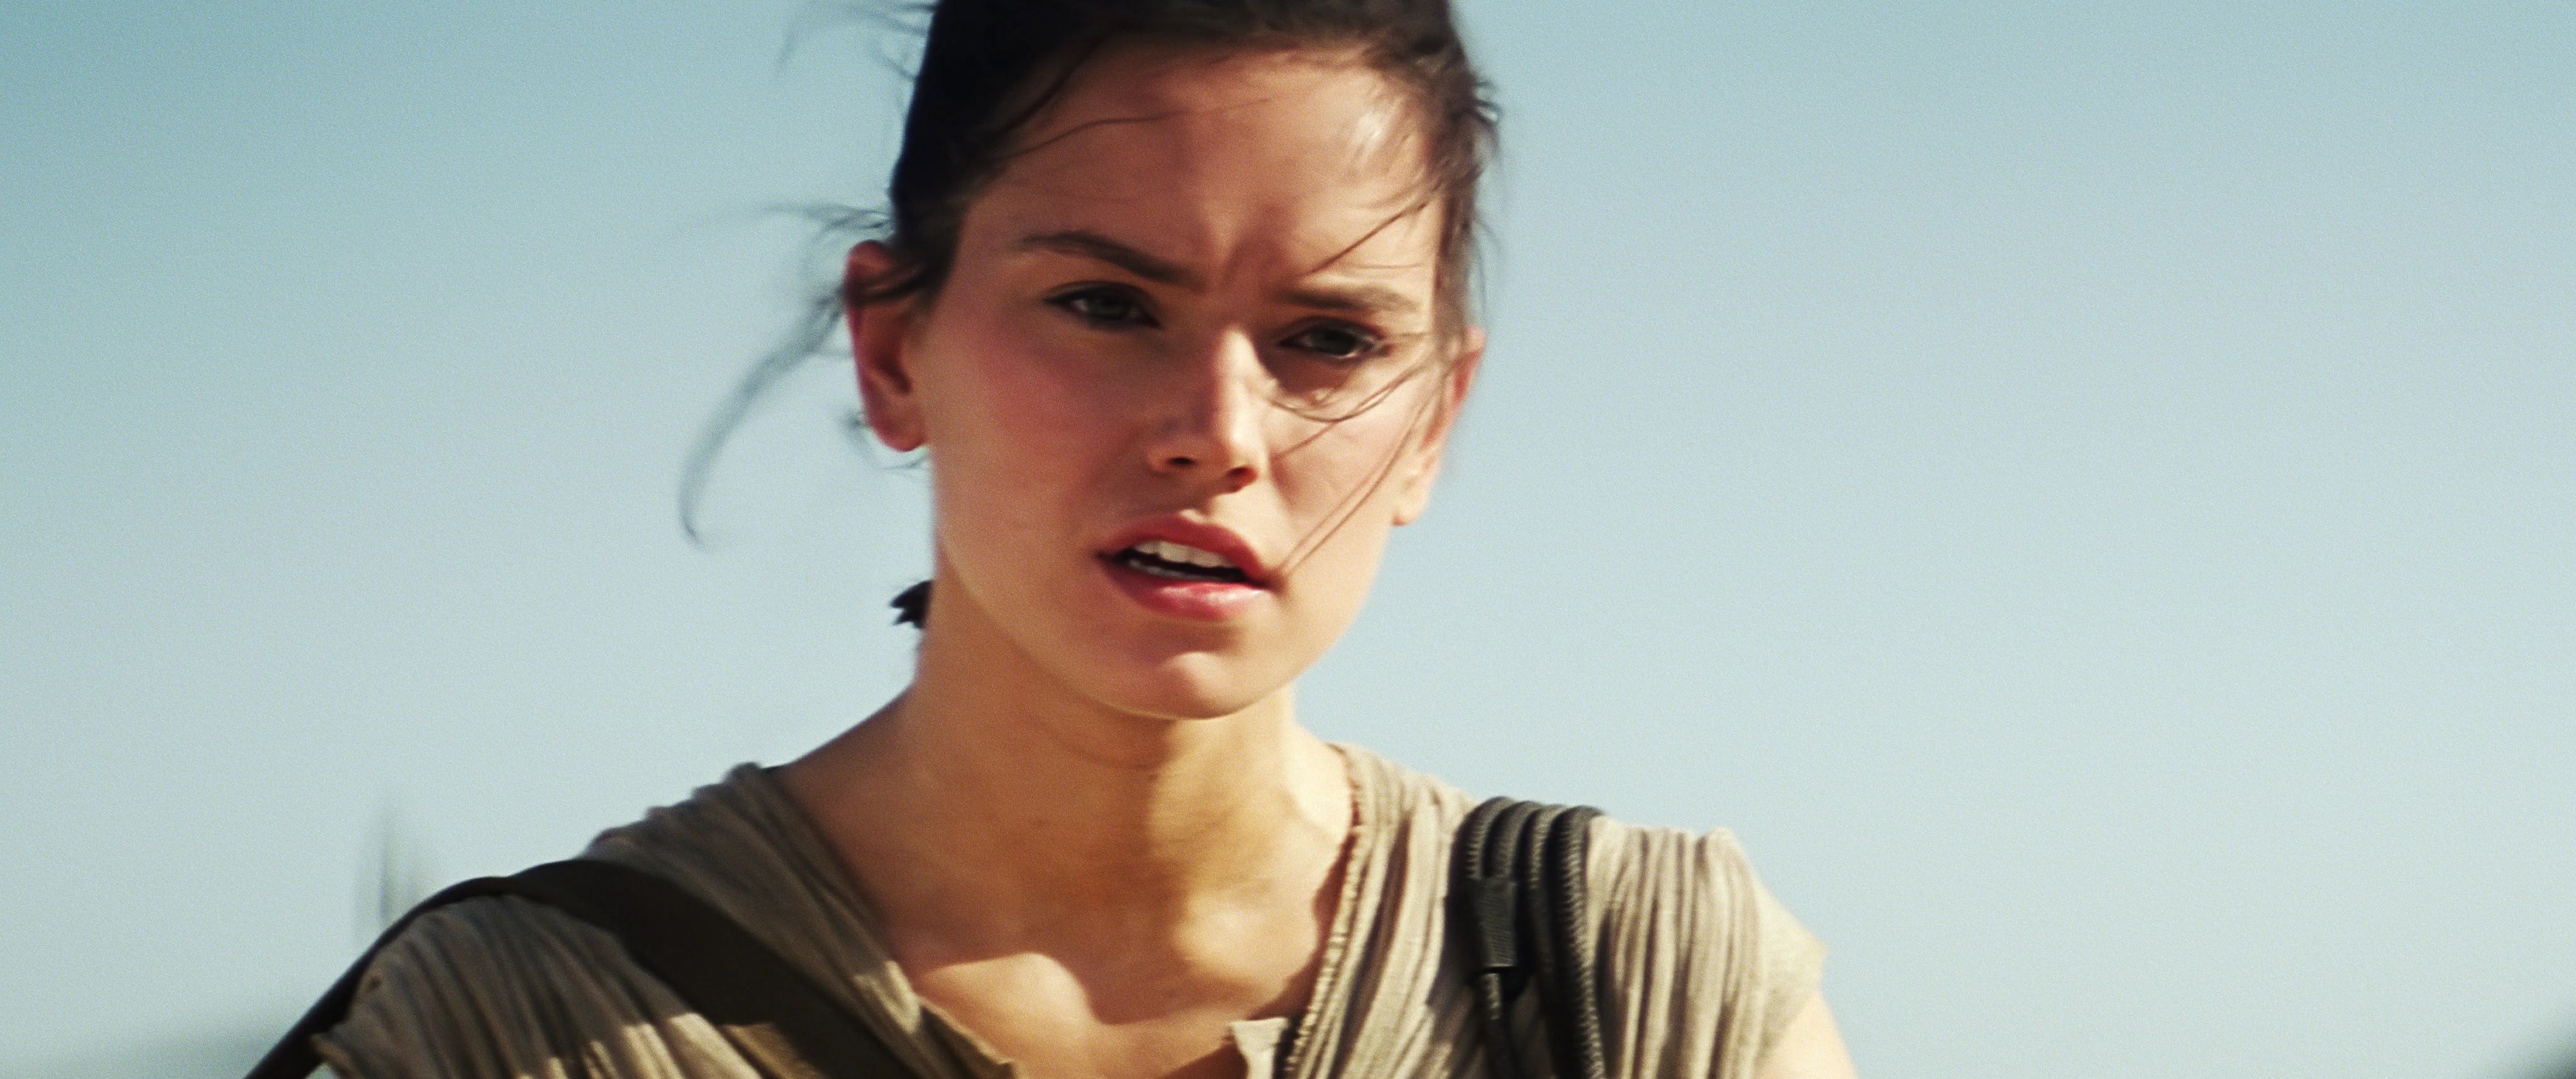 Daisy Ridley as she appears in Star Wars as Rey.